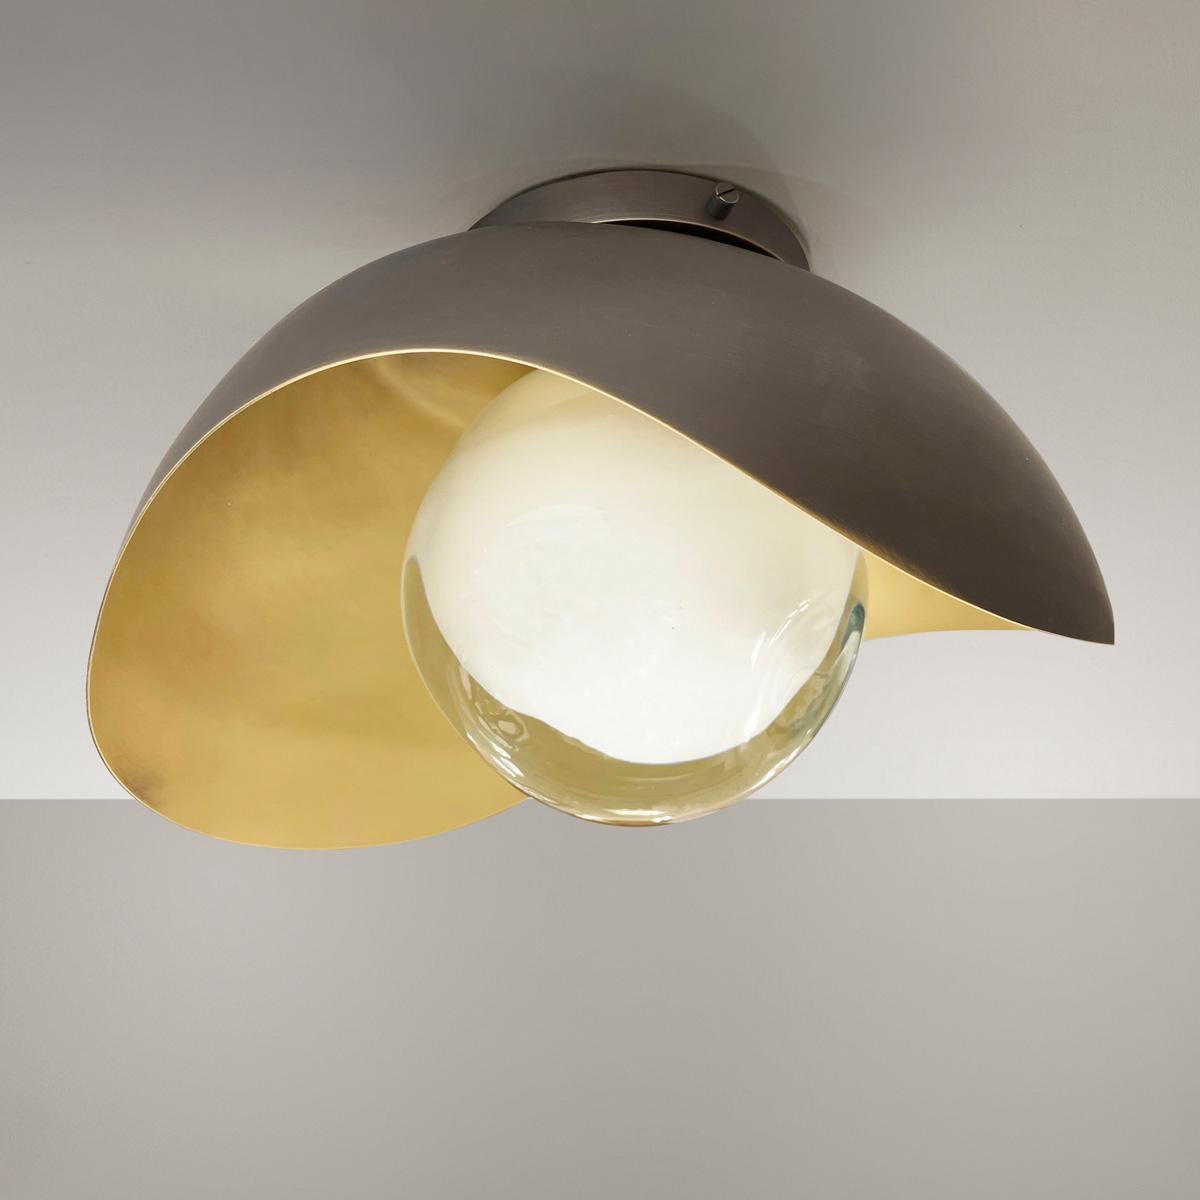 Perla Flushmount Ceiling Light by Gaspare Asaro-Satin Brass/Acqua Finish For Sale 1